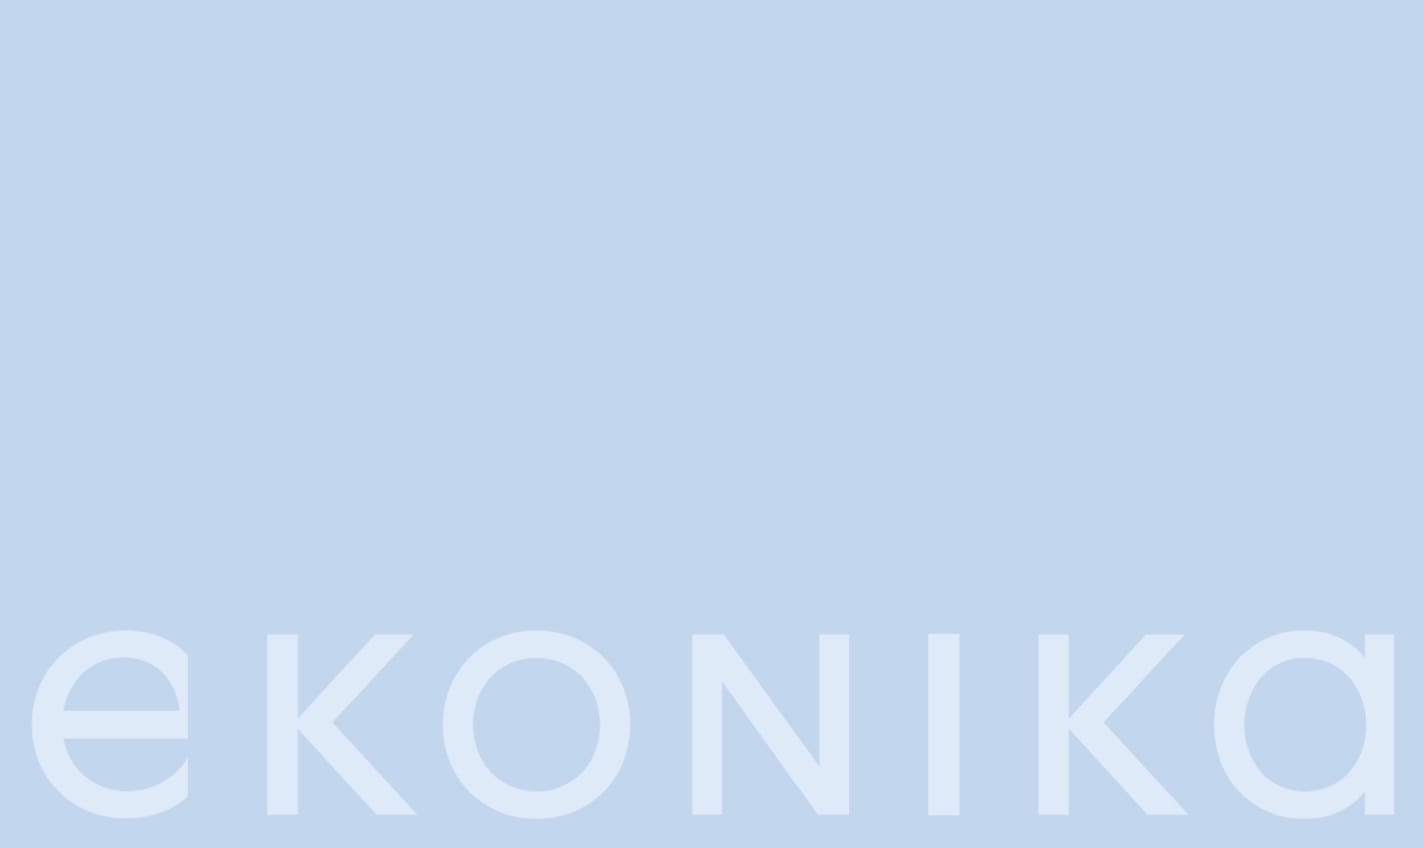 Новый логотип EKONIKA на небесно-голубом фирменном фоне